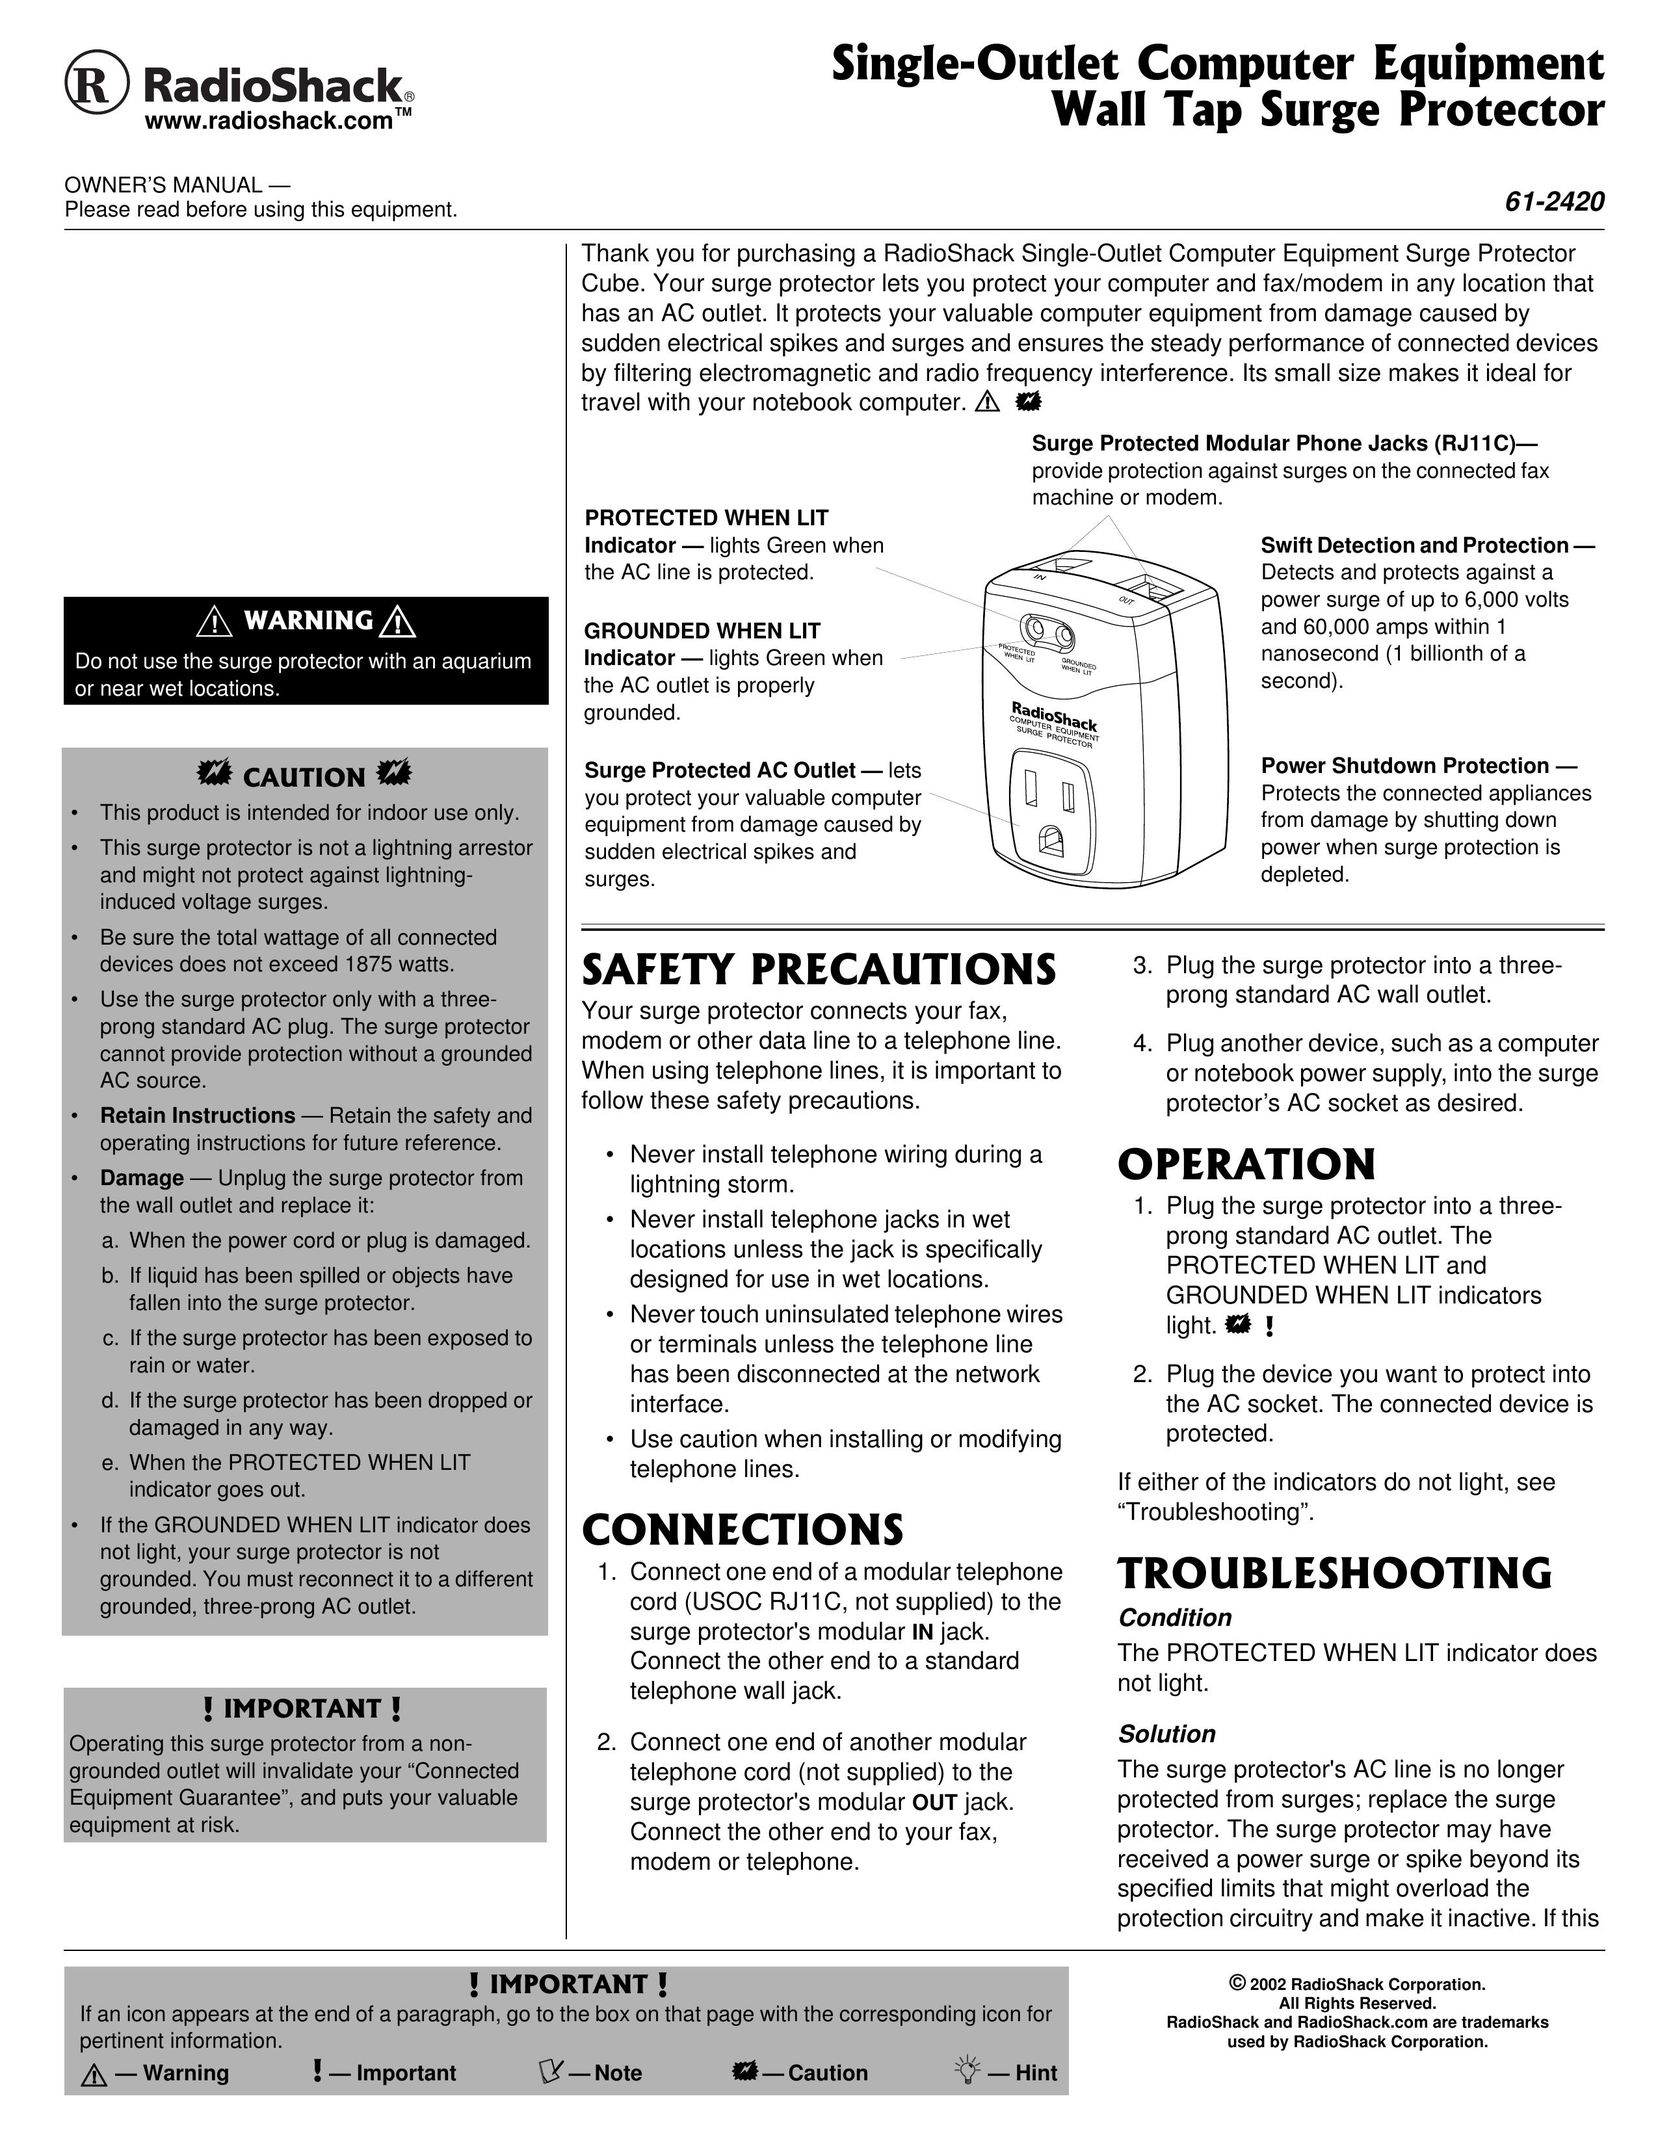 Radio Shack 61-2420 Surge Protector User Manual